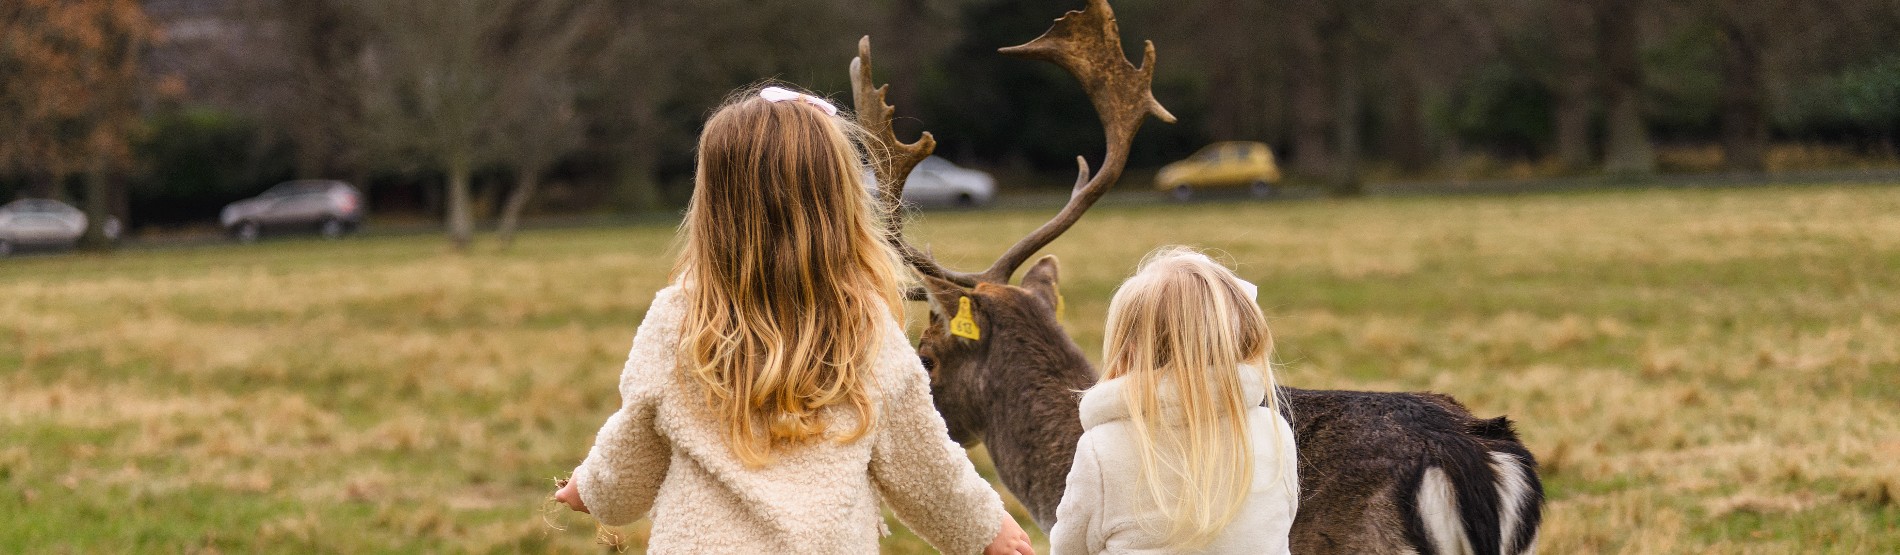 Children looking at a deer